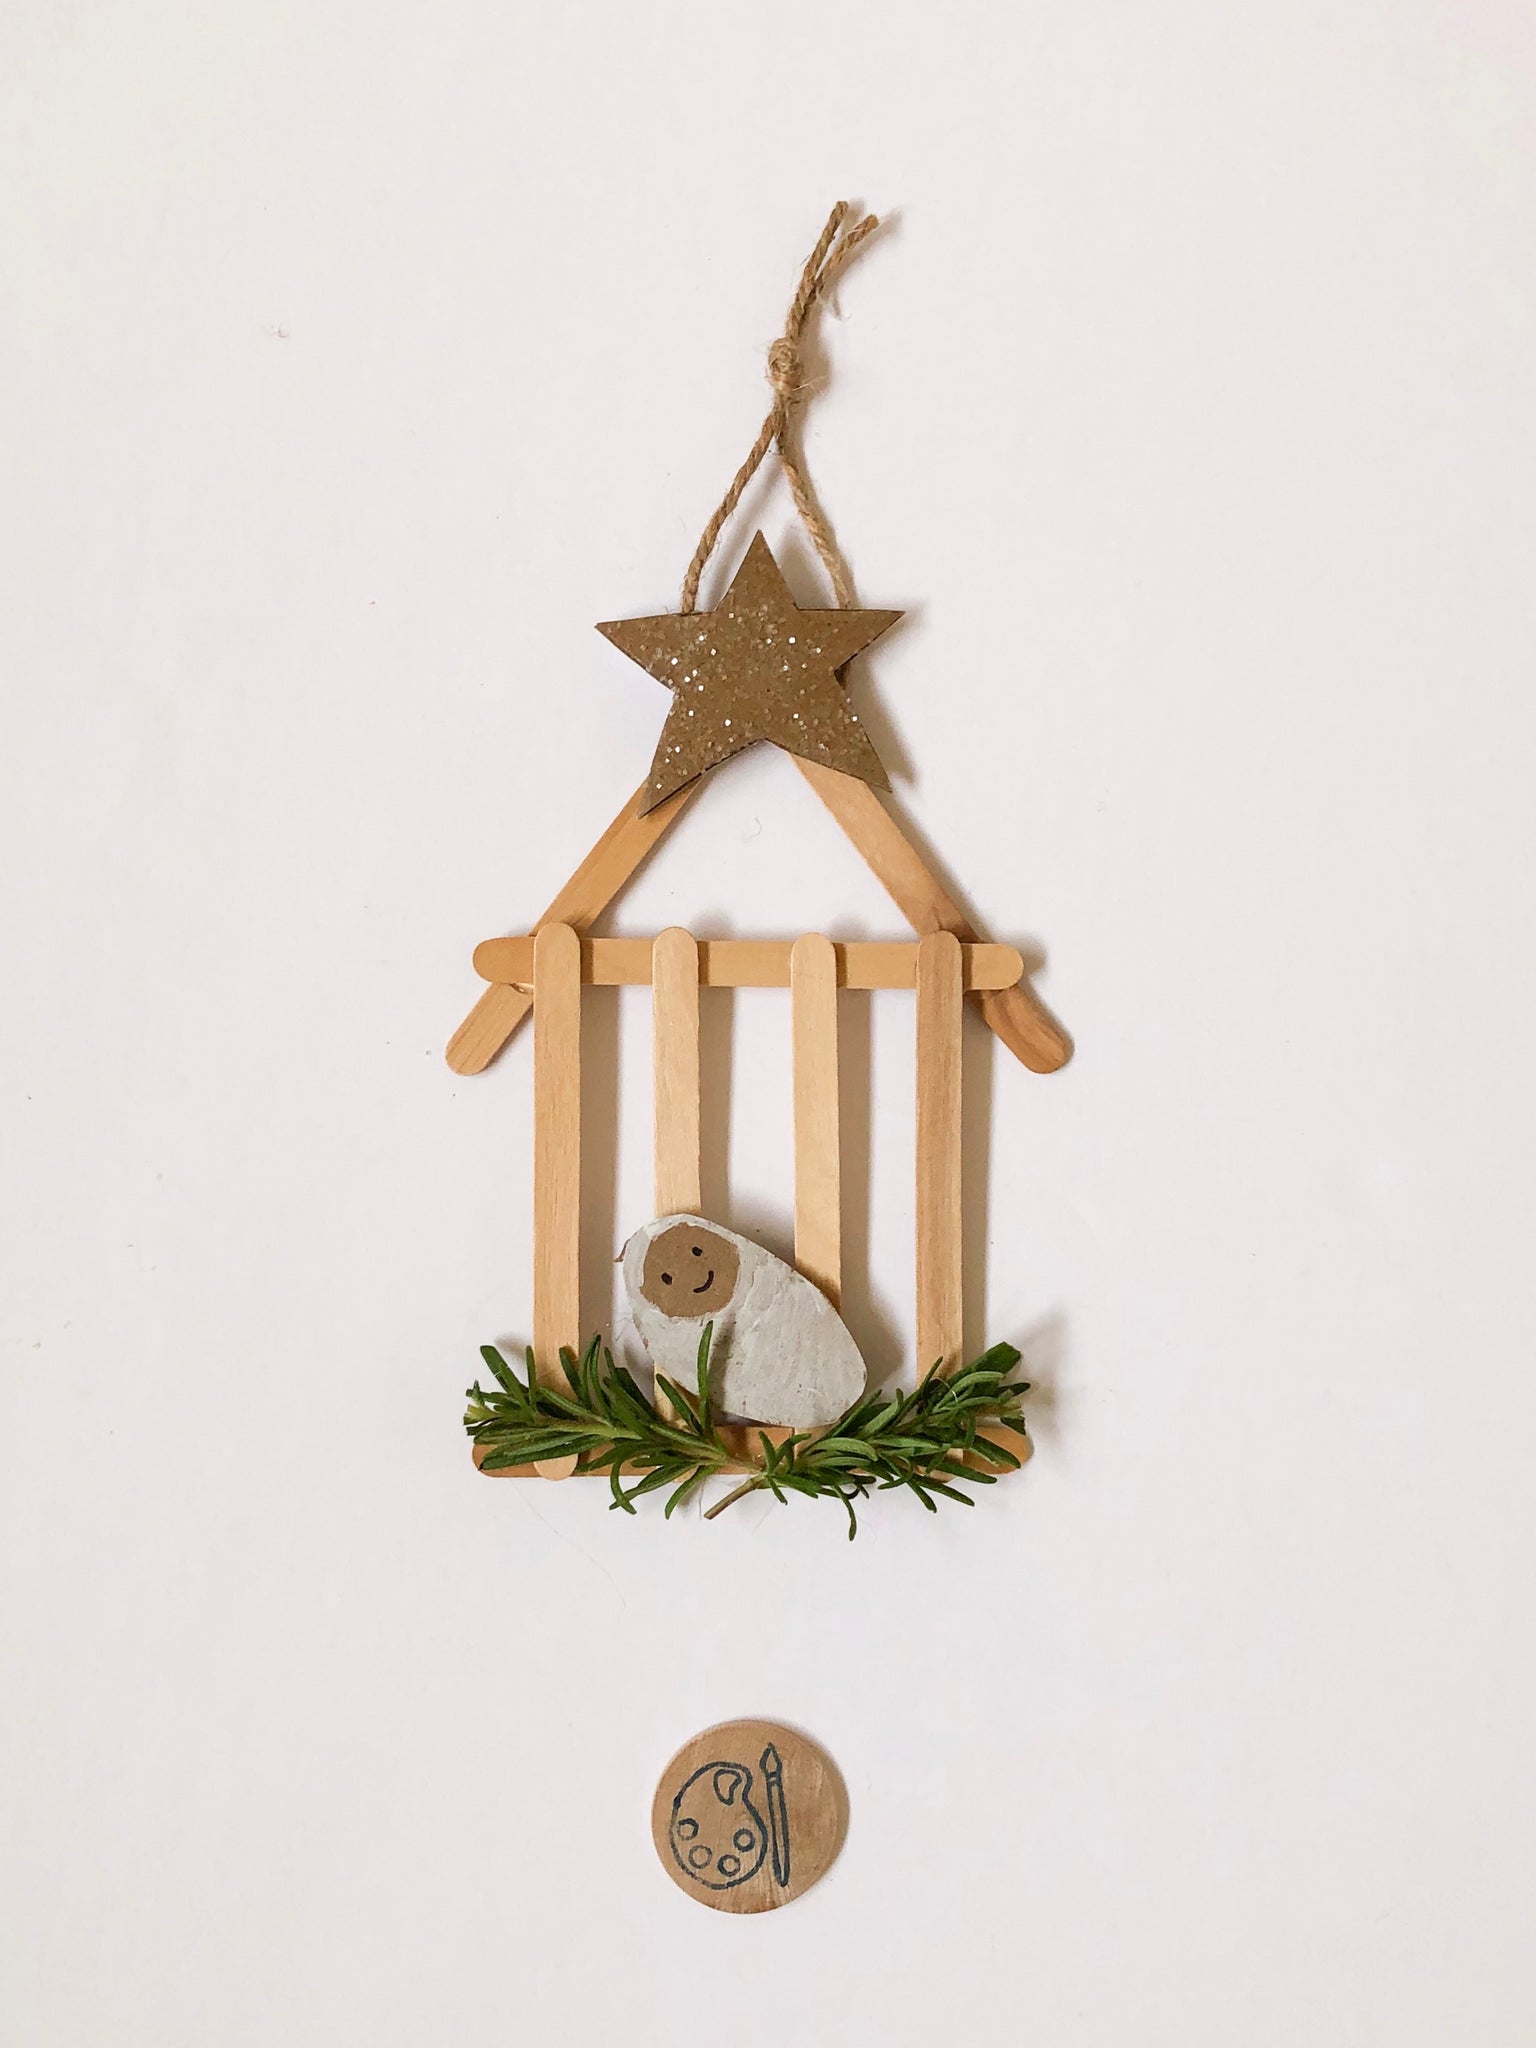 Craft Stick Nativity Ornament